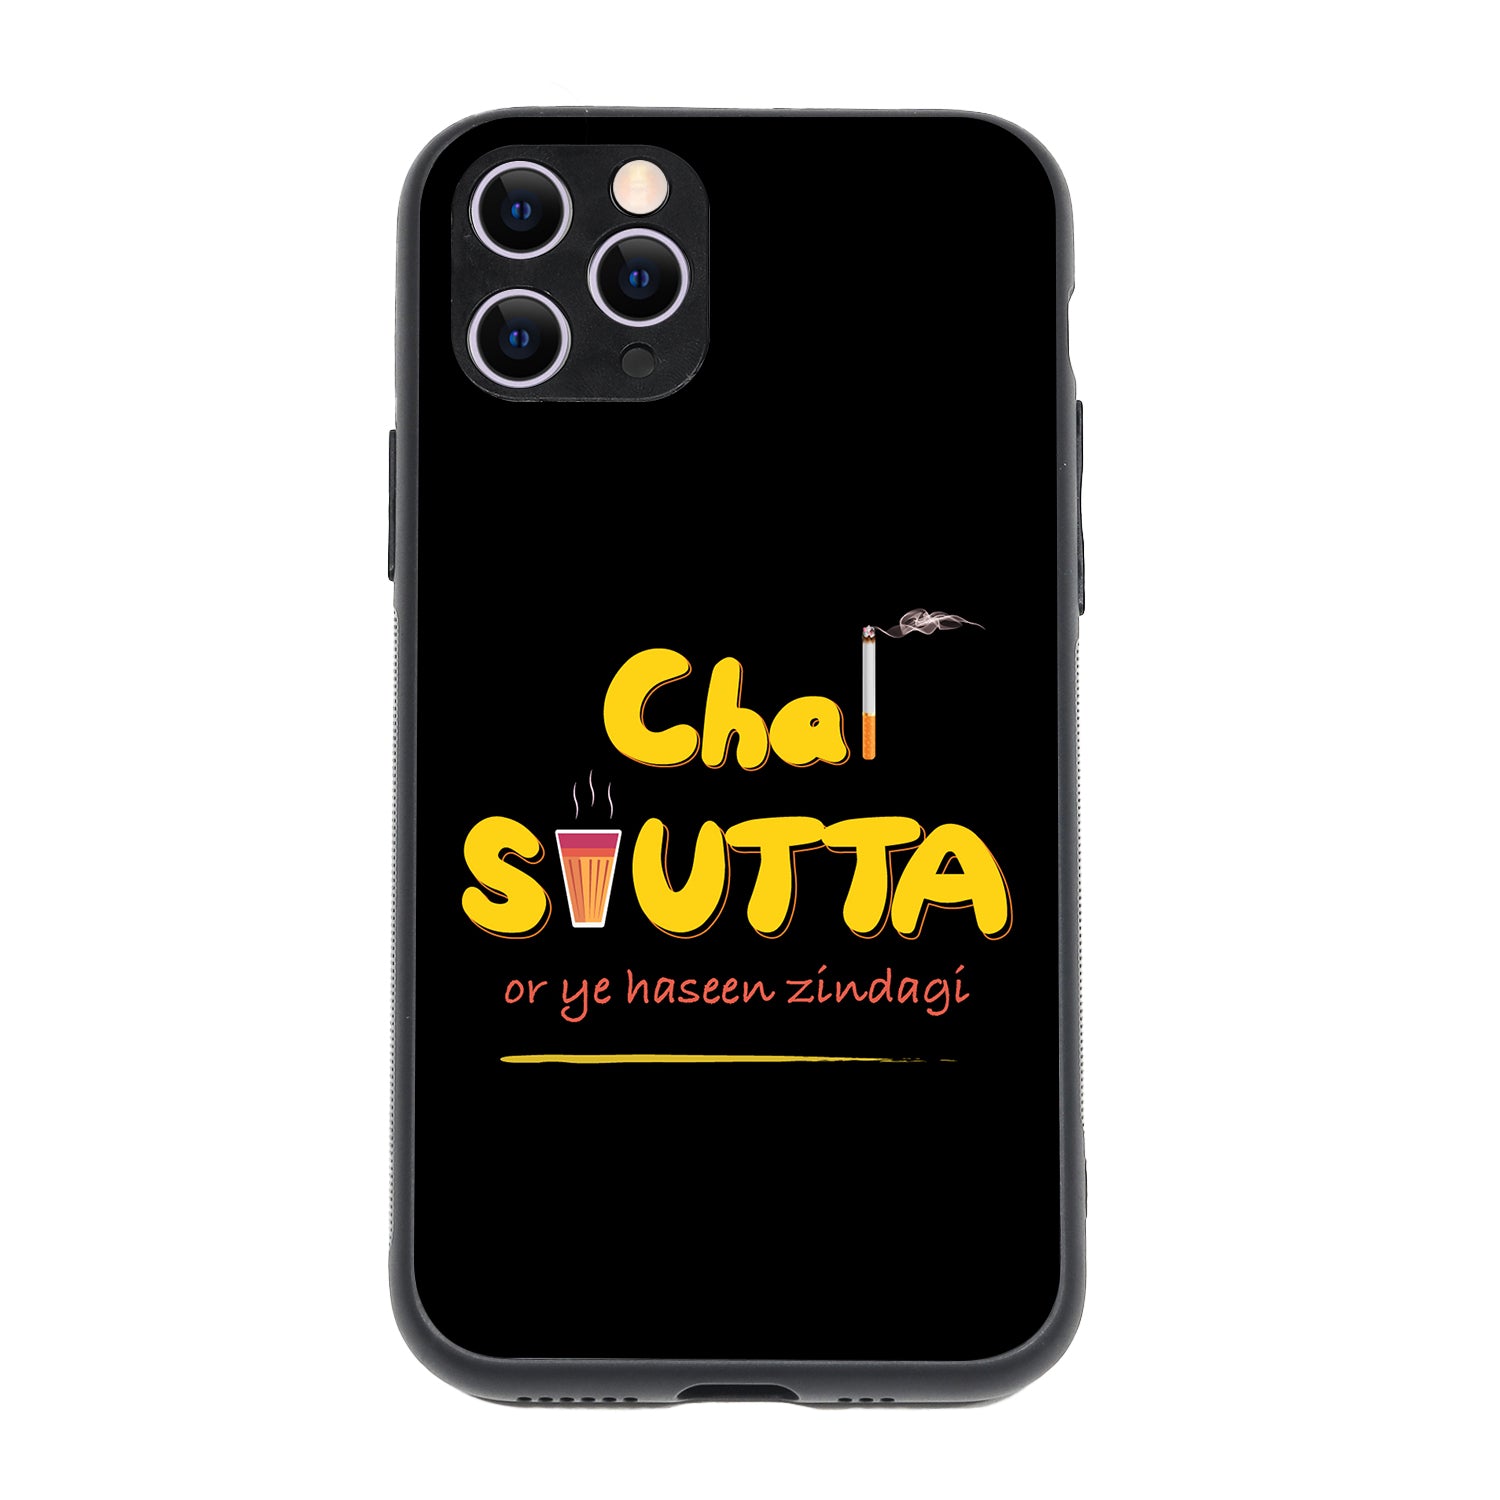 Chai-Sutta Motivational Quotes iPhone 11 Pro Case